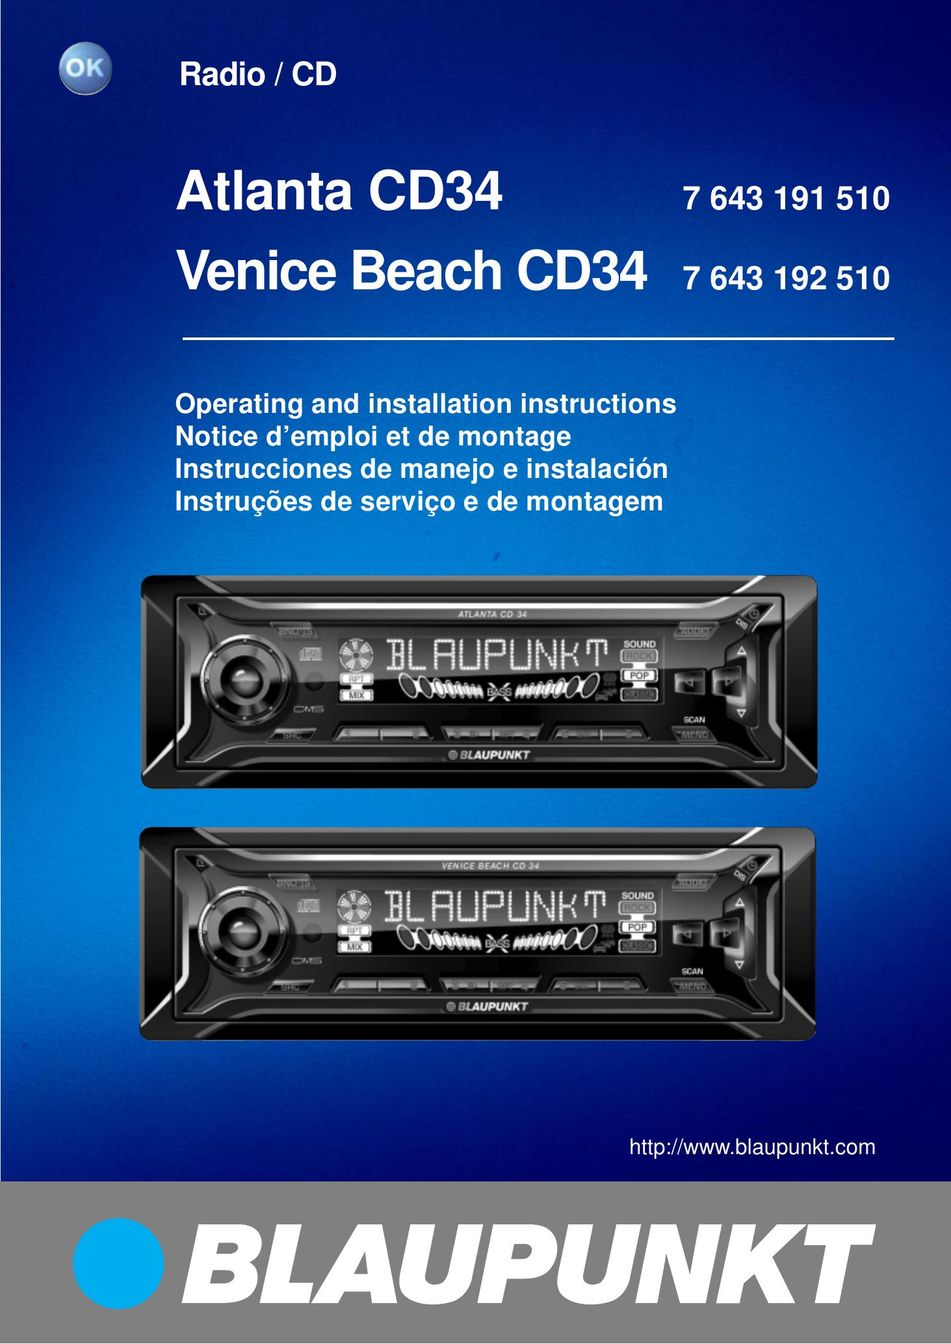 Blaupunkt Atlanta CD34, Venice Beach CD34 Portable Radio User Manual